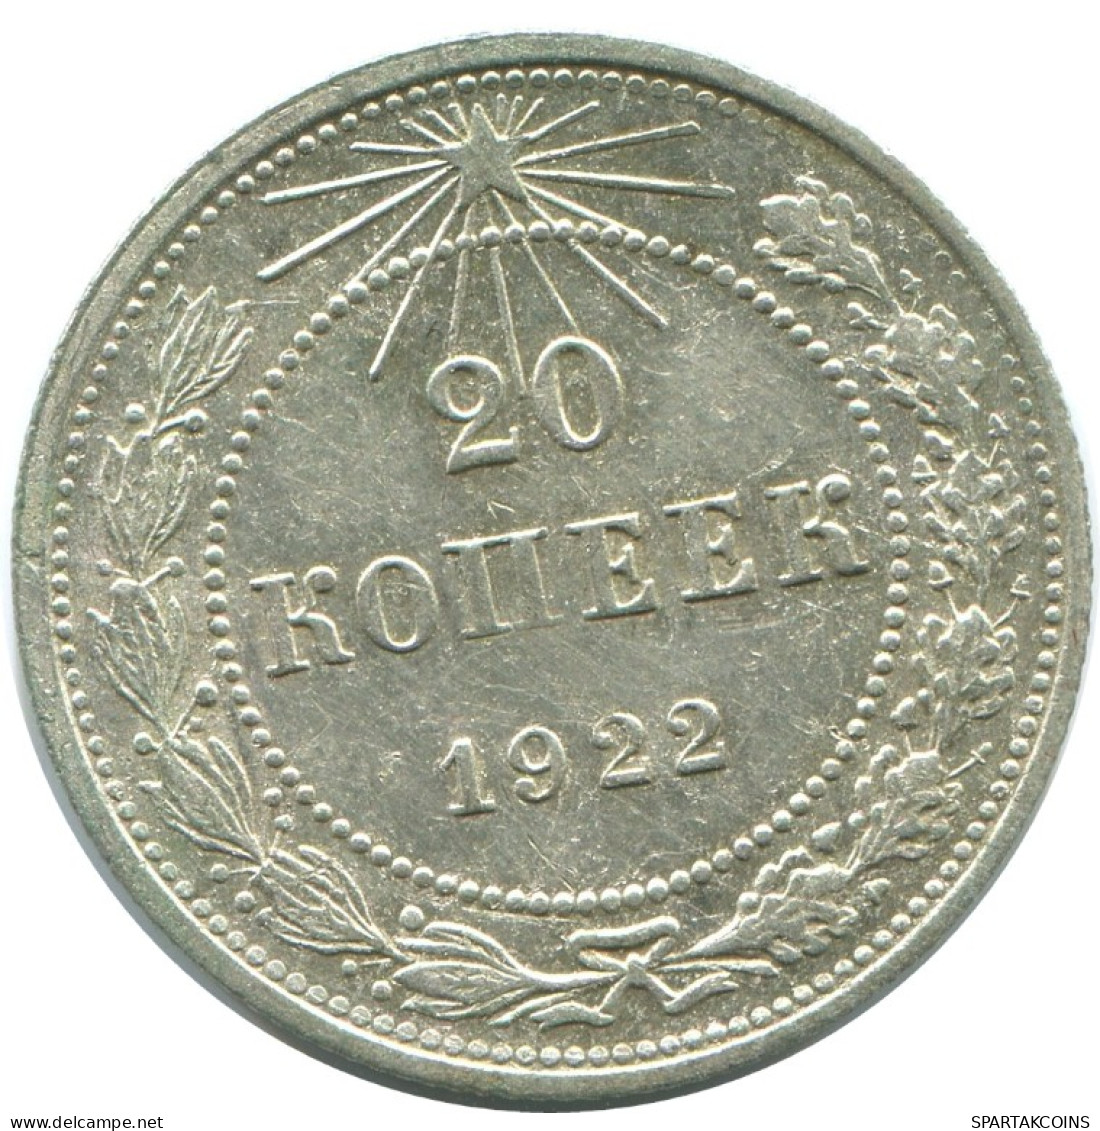 20 KOPEKS 1923 RUSSIA RSFSR SILVER Coin HIGH GRADE #AF385.4.U.A - Russia